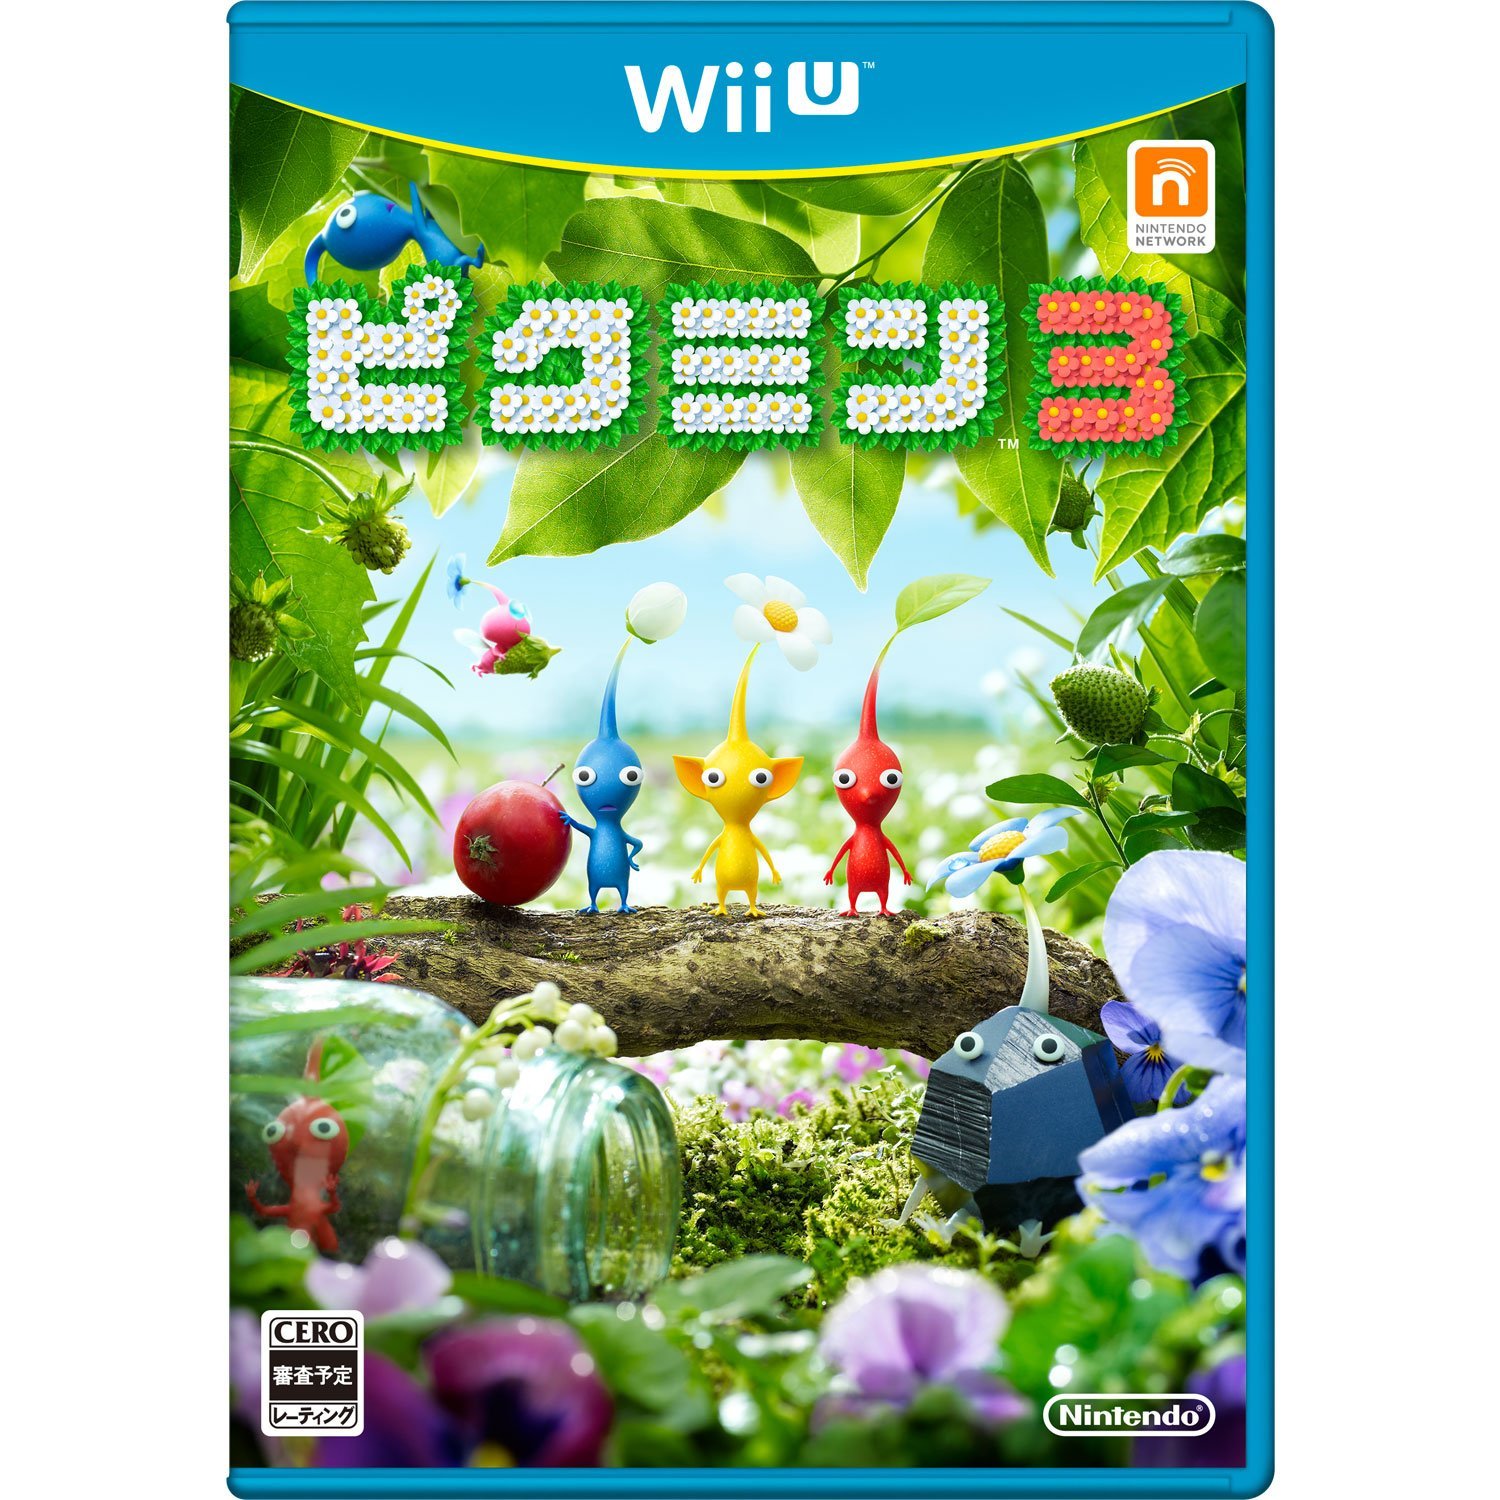 Wii U ピクミン3の早期予約情報 オリジナルサウンドトラックはこちら ピクミン3wiiu激安予約情報はココ